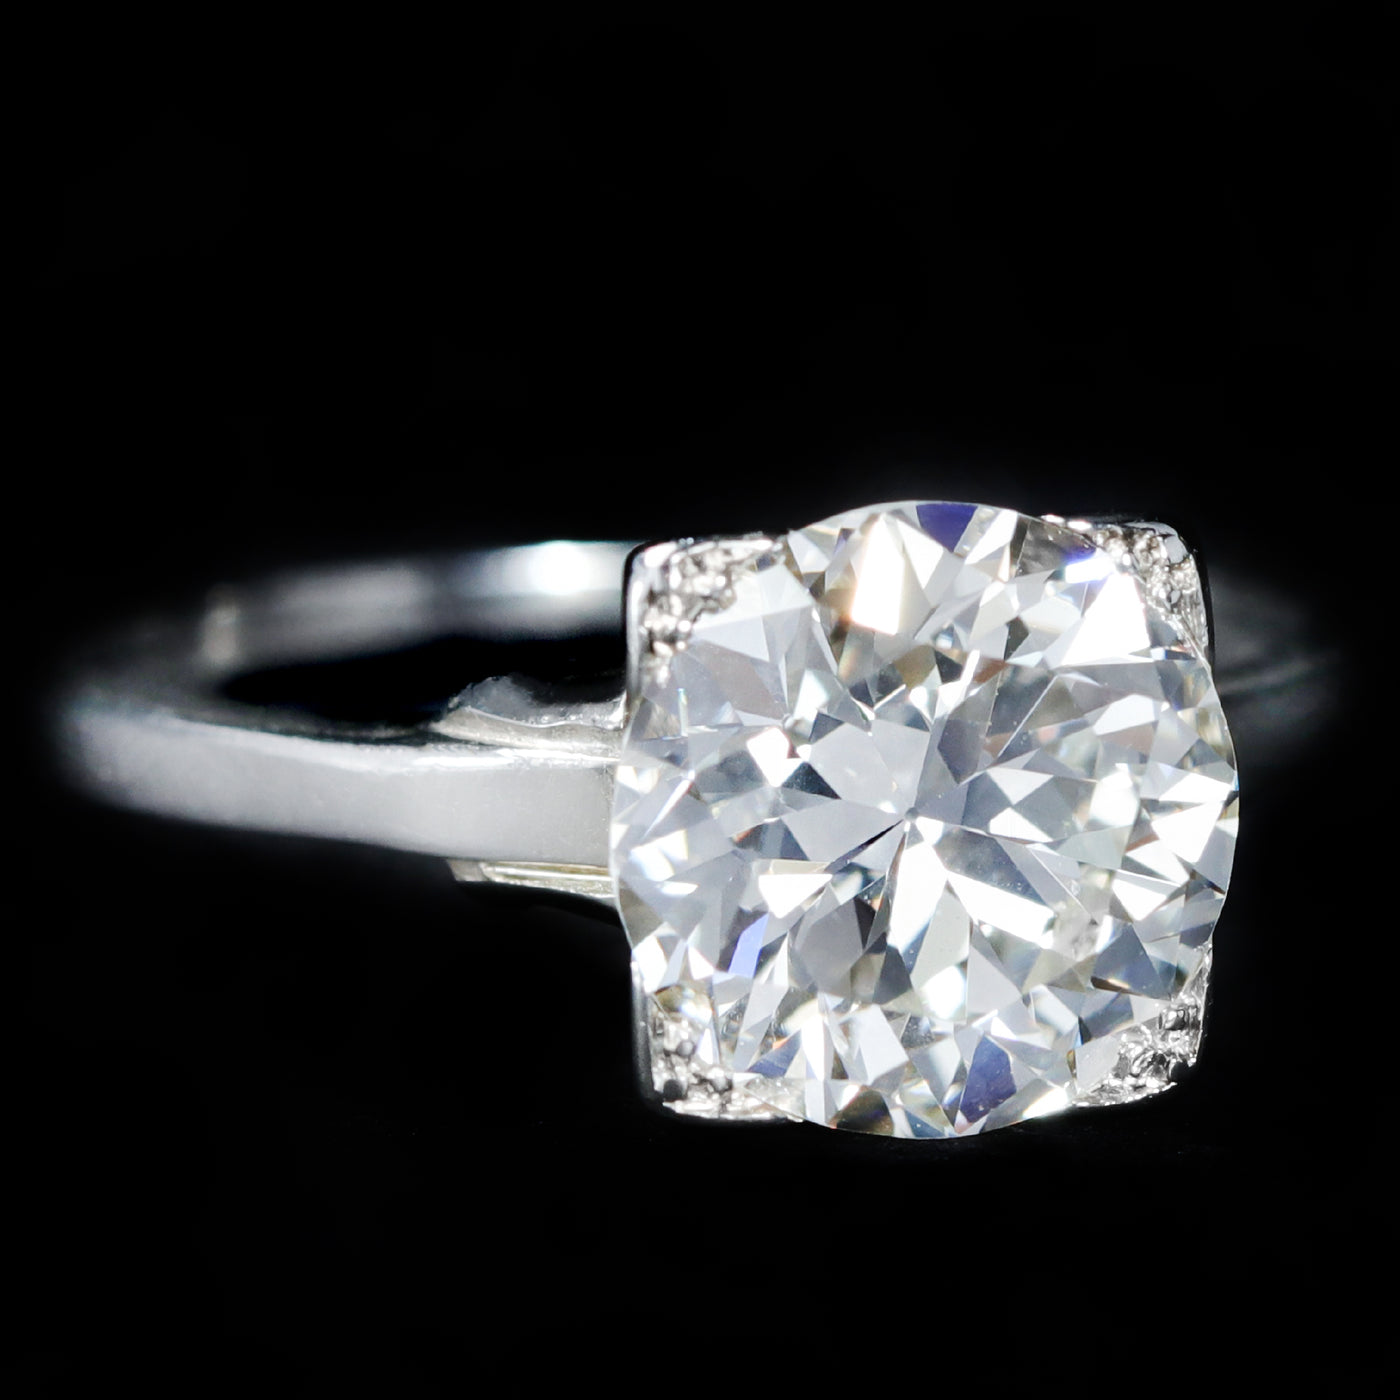 Art Deco 2.47 Carat Old European Cut Diamond Engagement Ring